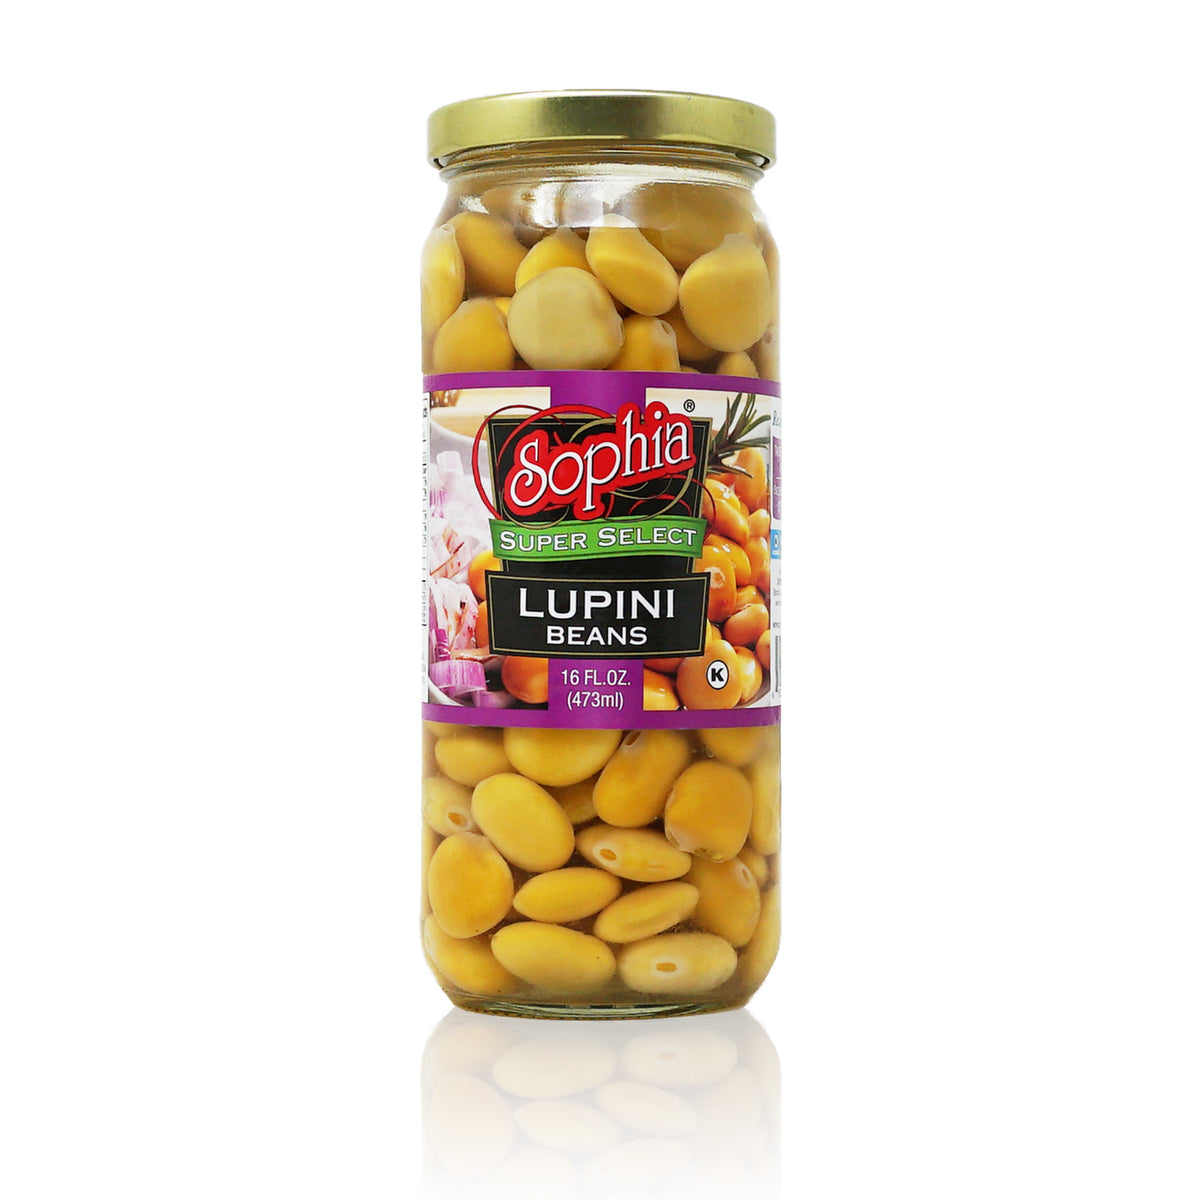 Sophia Lupini Beans